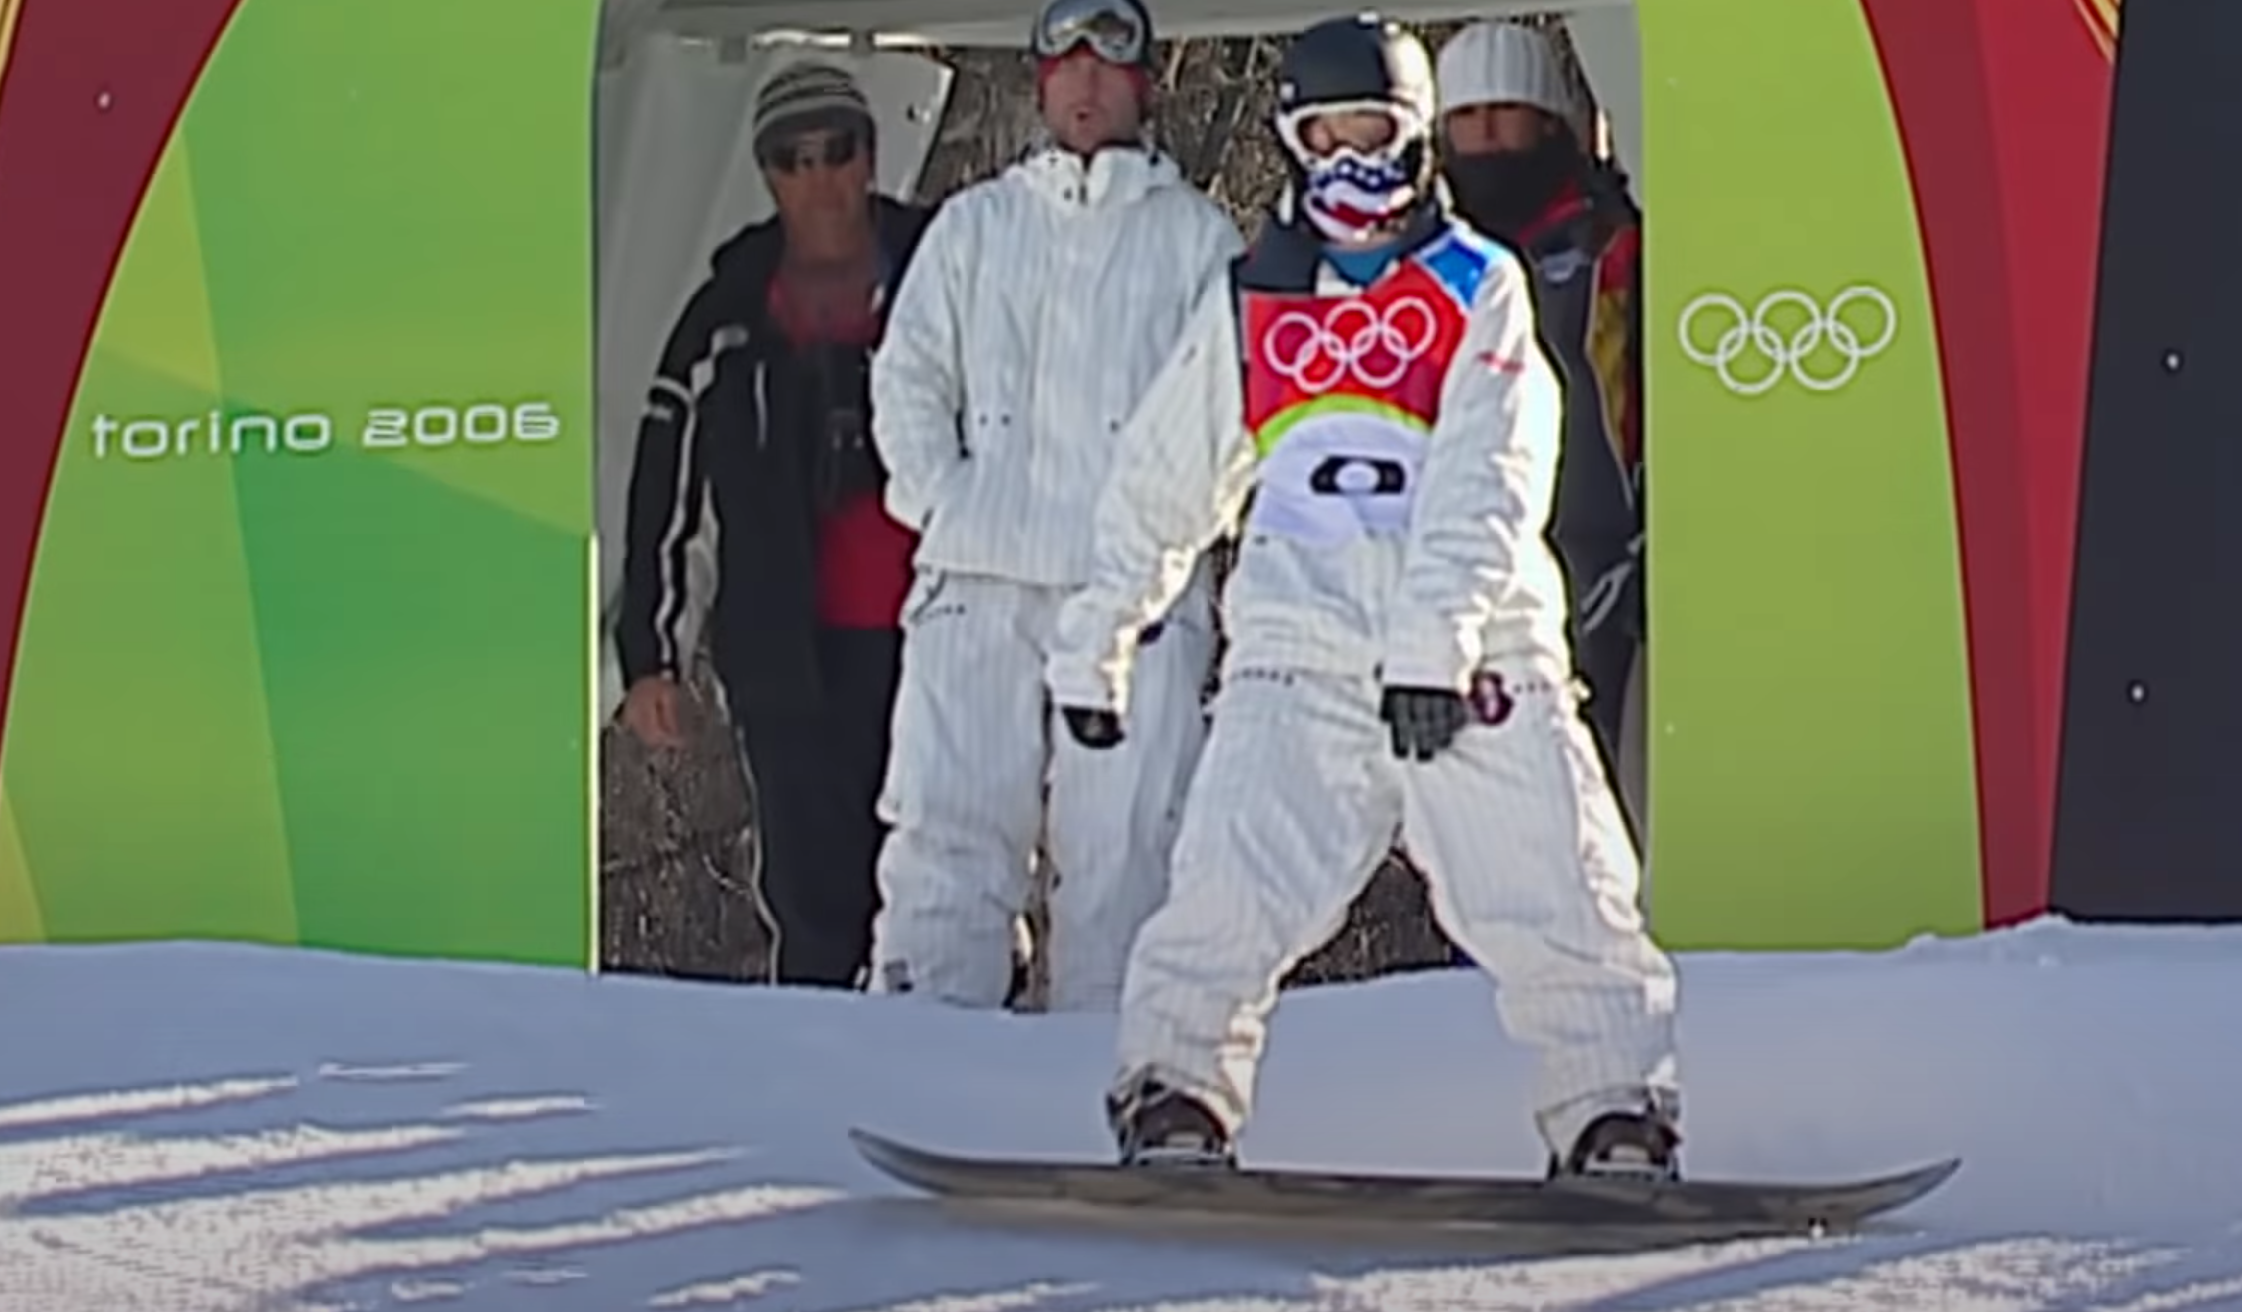 18 year-old Shaun White, Snowboarding Legend